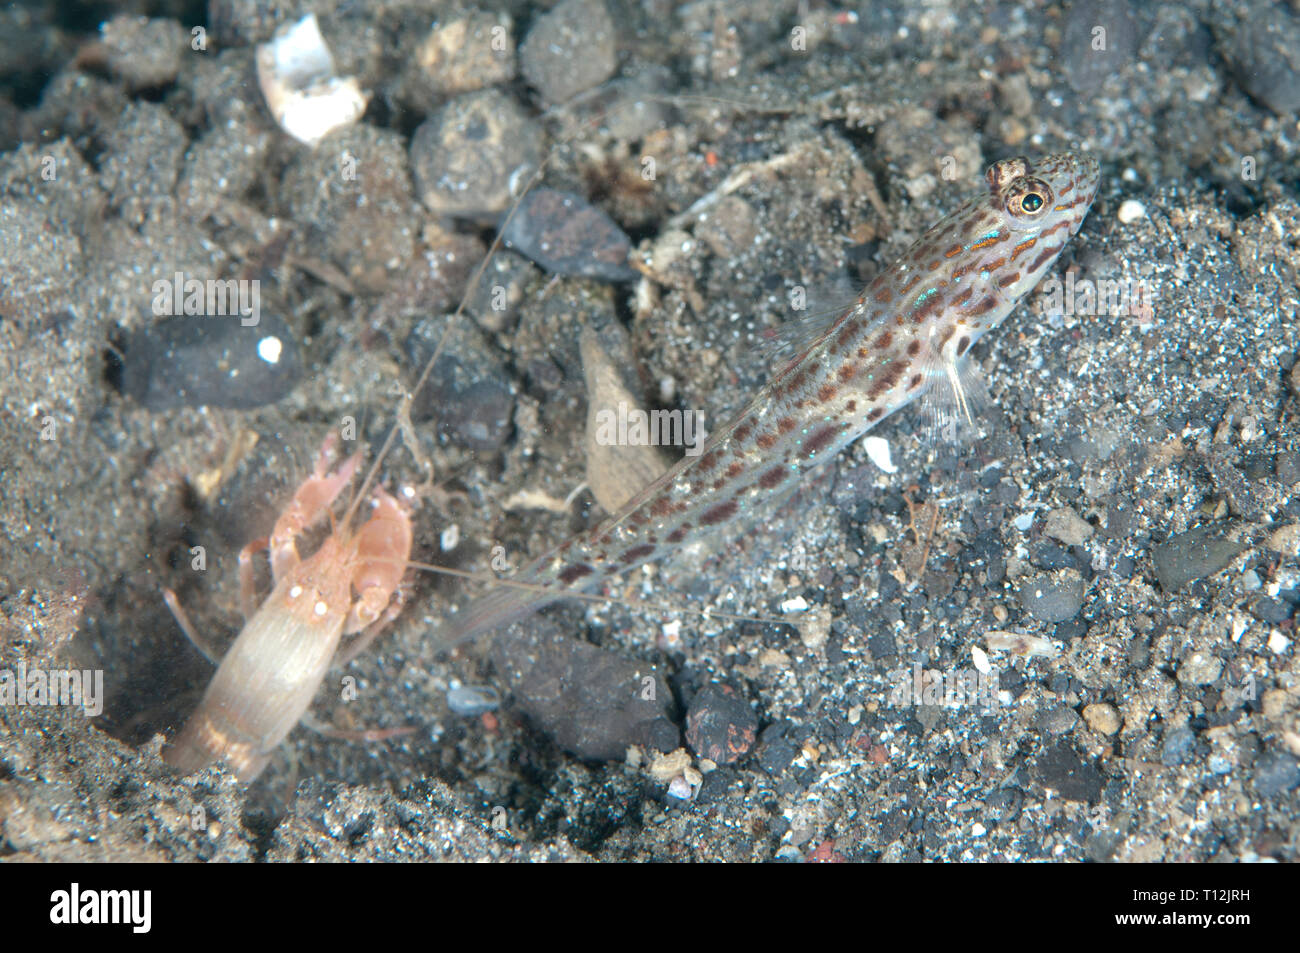 Gold-streaked Shrimpgoby, Ctenogobiops aurocingulus, with Snapping Shrimp, Alpheus sp, at hole entrance, Kareko Batu dive site, Lembeh Straits, Sulaw Stock Photo